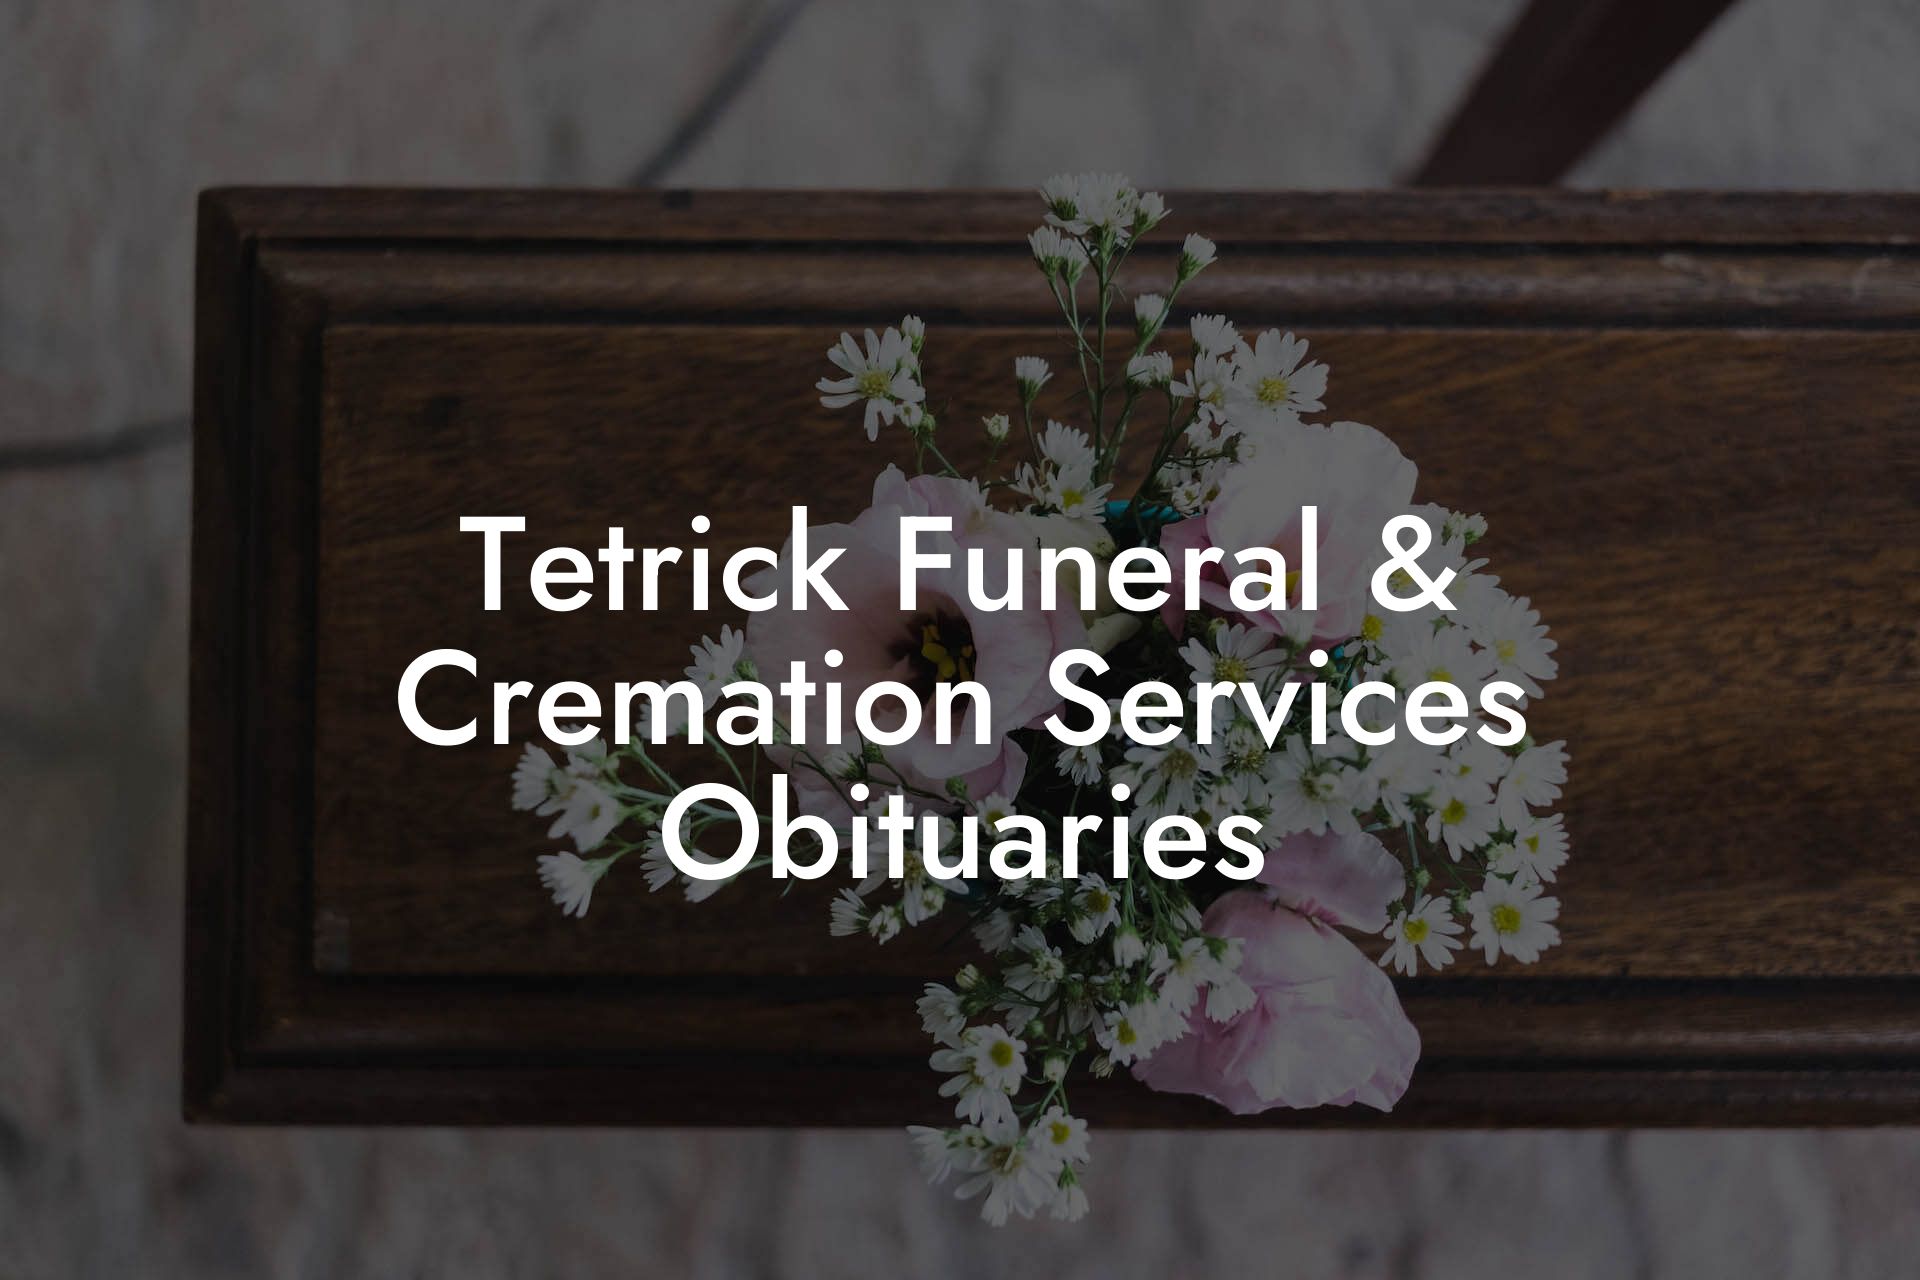 Tetrick Funeral & Cremation Services Obituaries